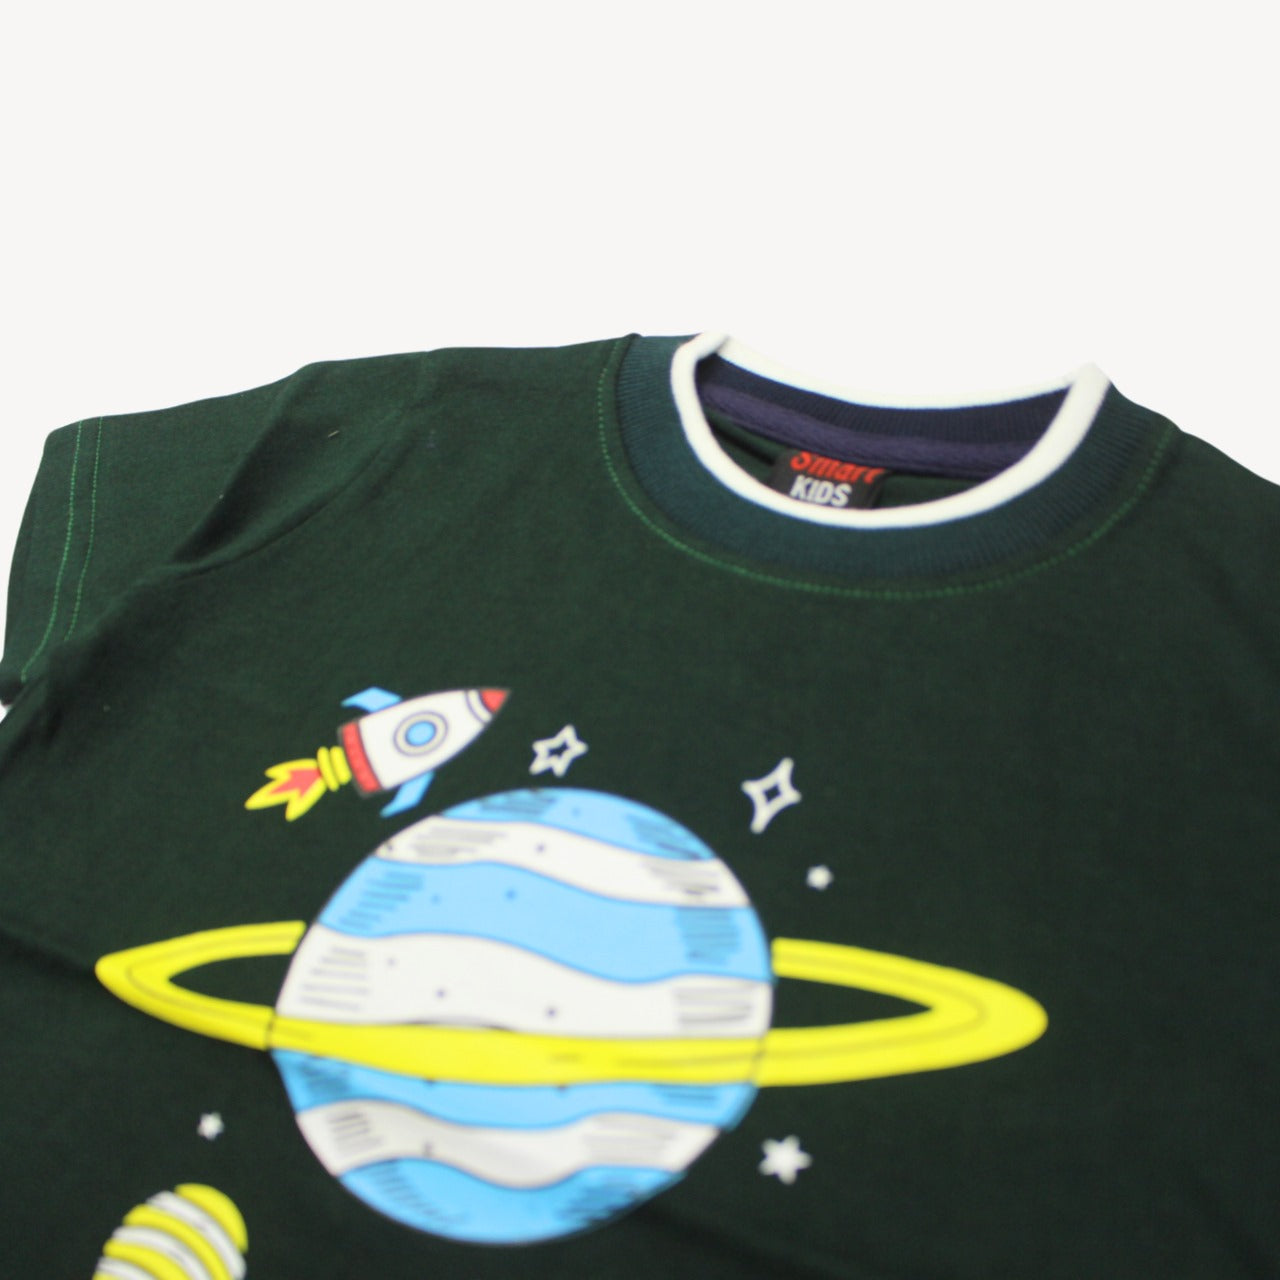 Dark Green Space Printed Cotton T-Shirt